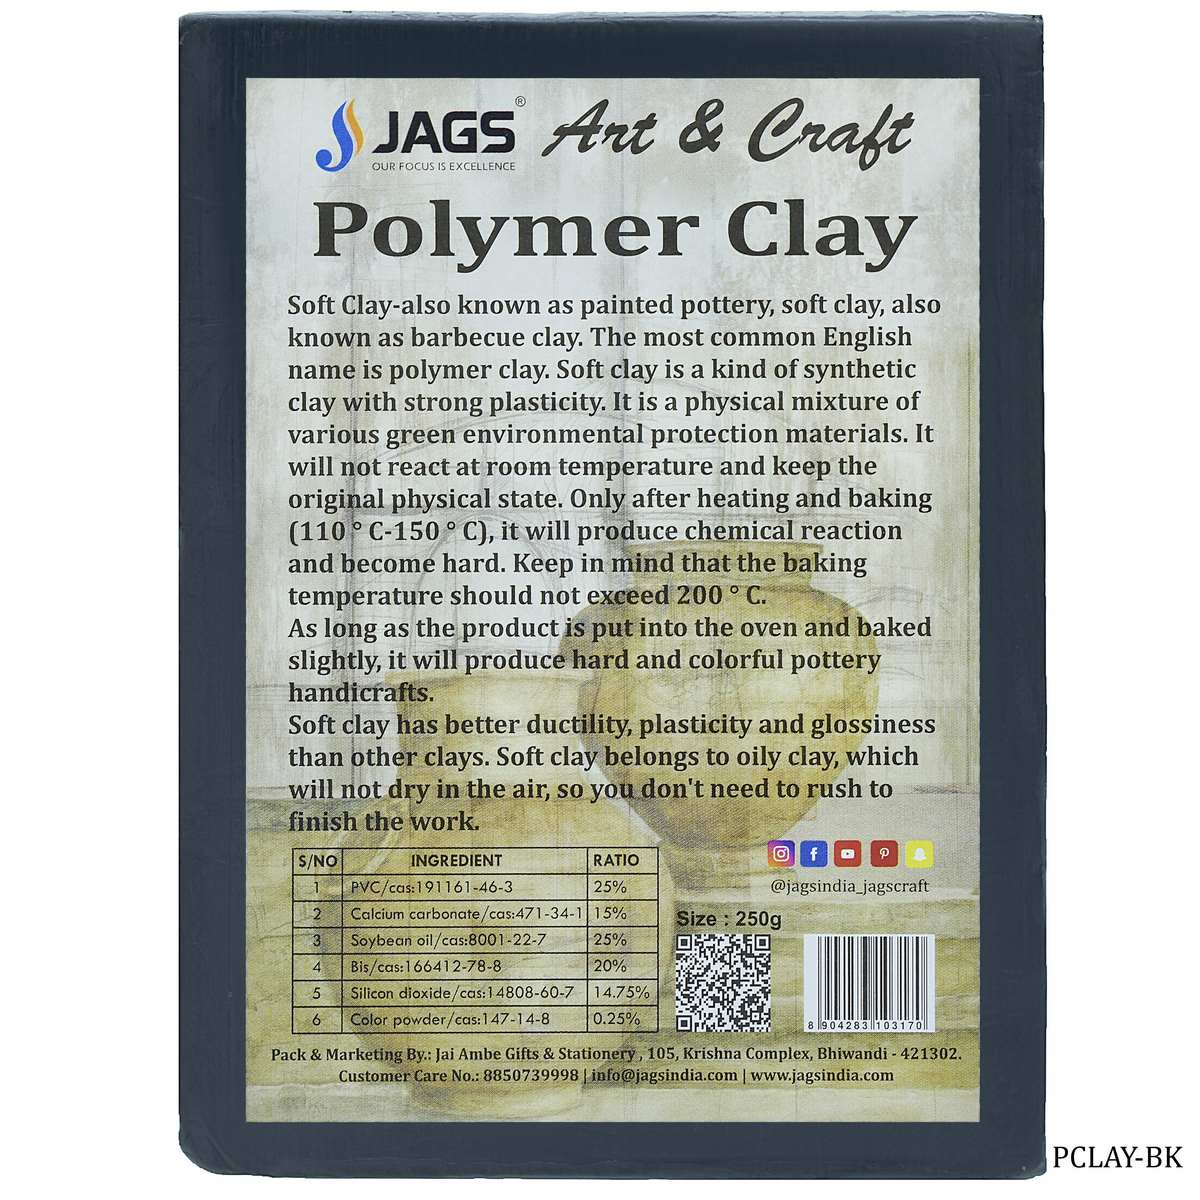 jags-mumbai Clay Polymer Clay 250gm Black  PCLAY-BK